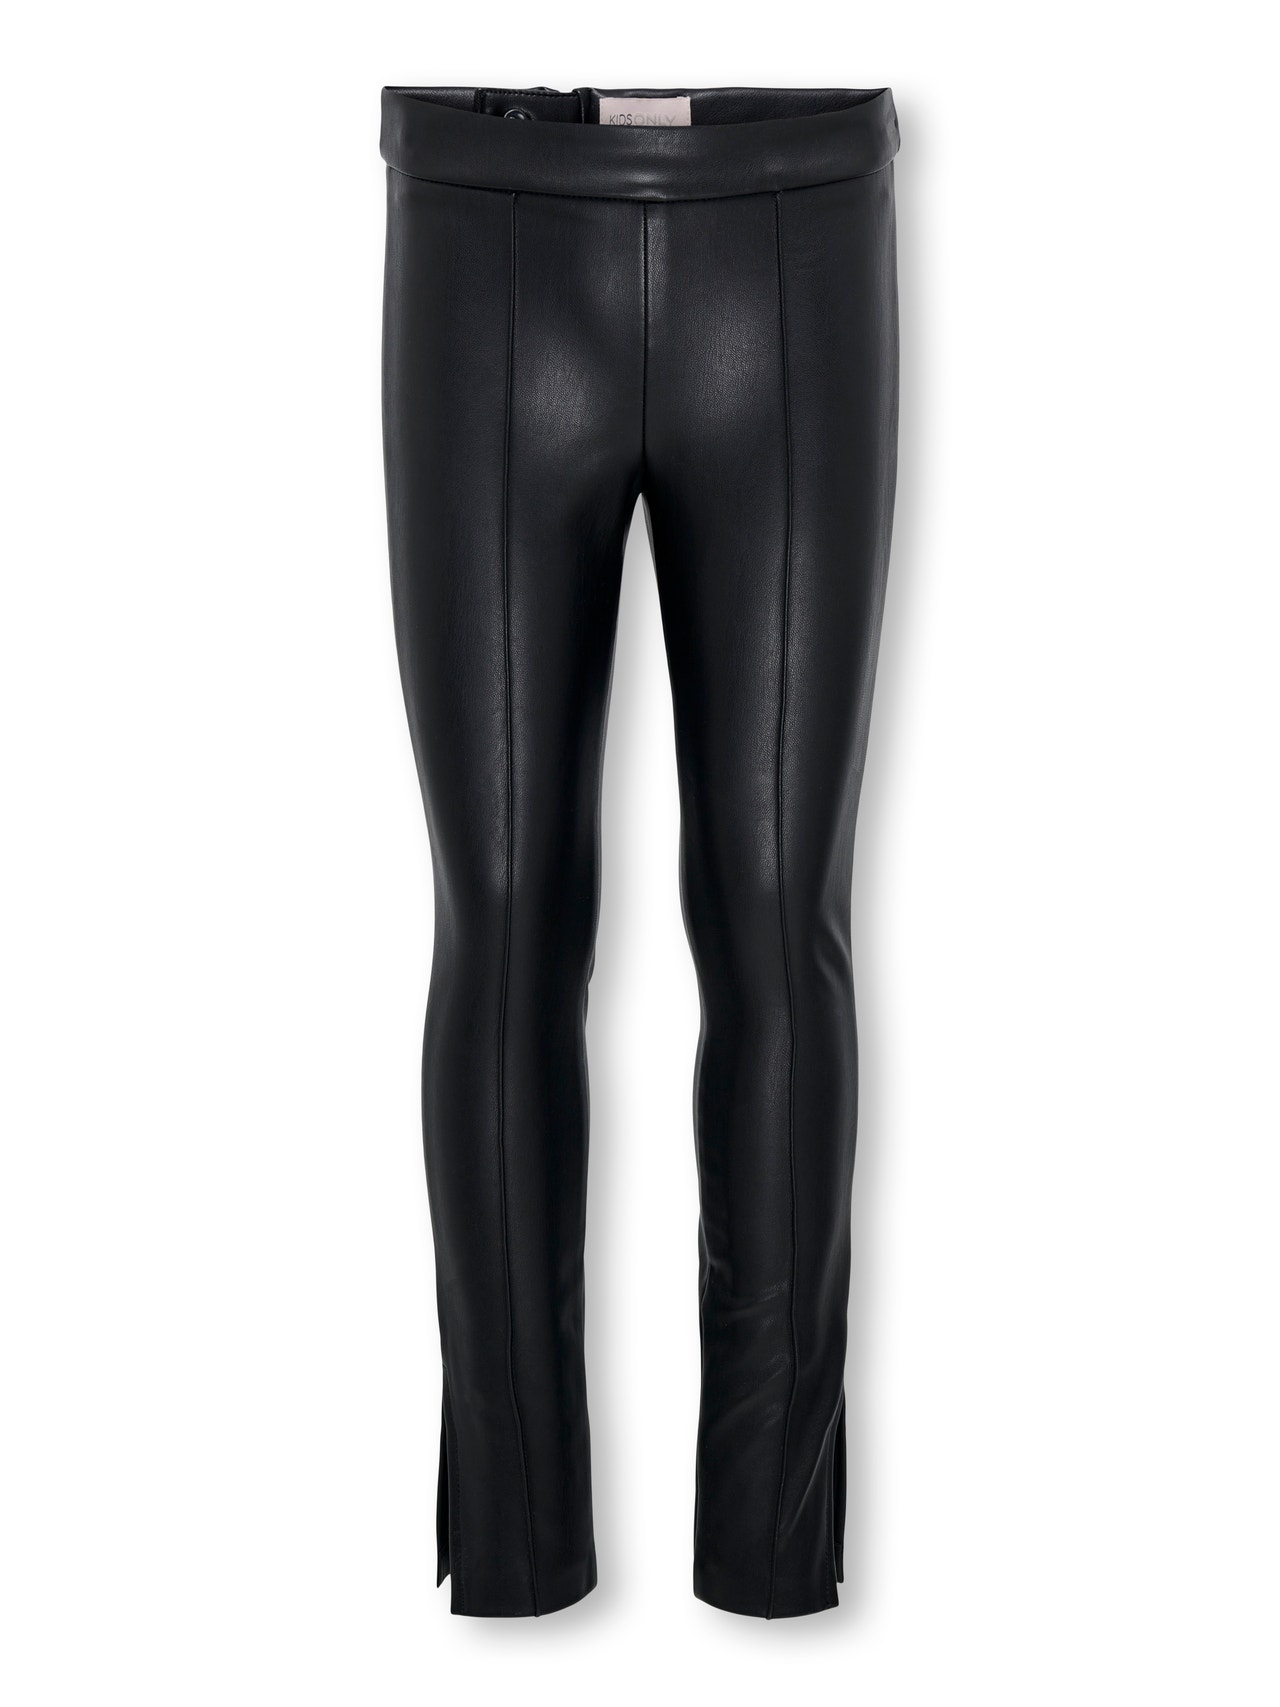 ONLY Leggings Slim Fit Fentes latérales -Black - 15269486